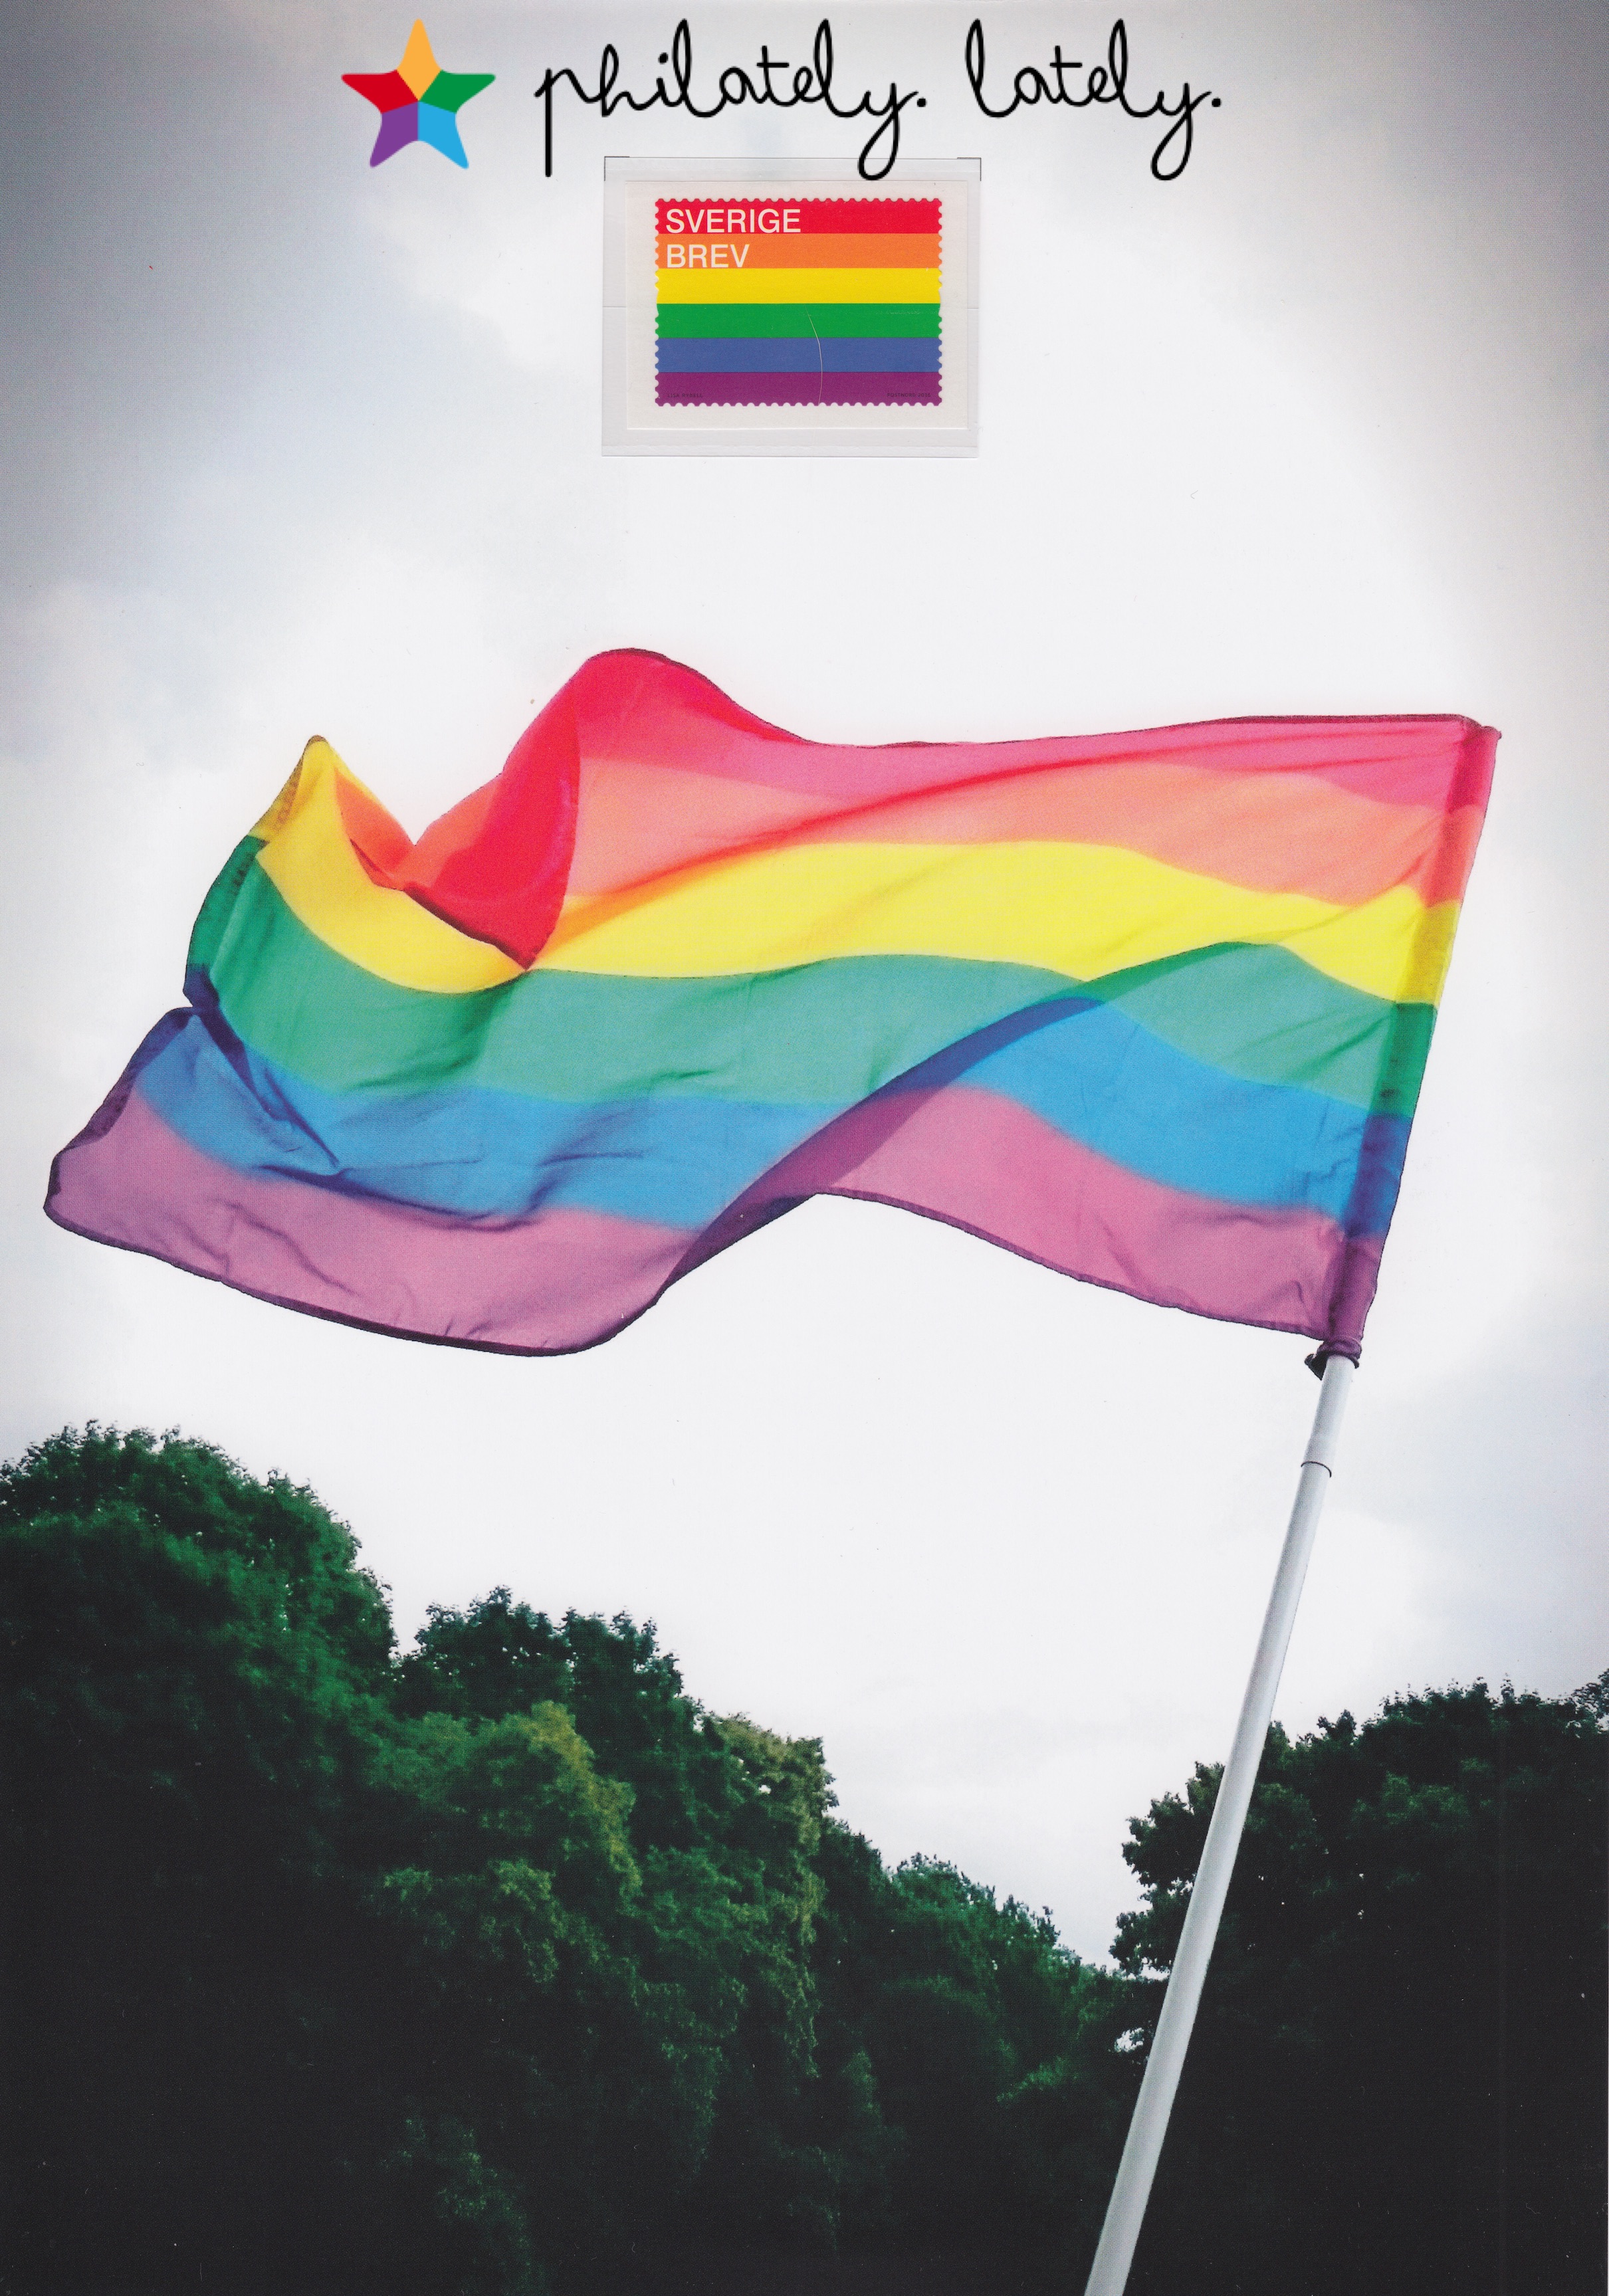 001_Sweden_LGBT_Stamp_First_Day_Sheet.jpg